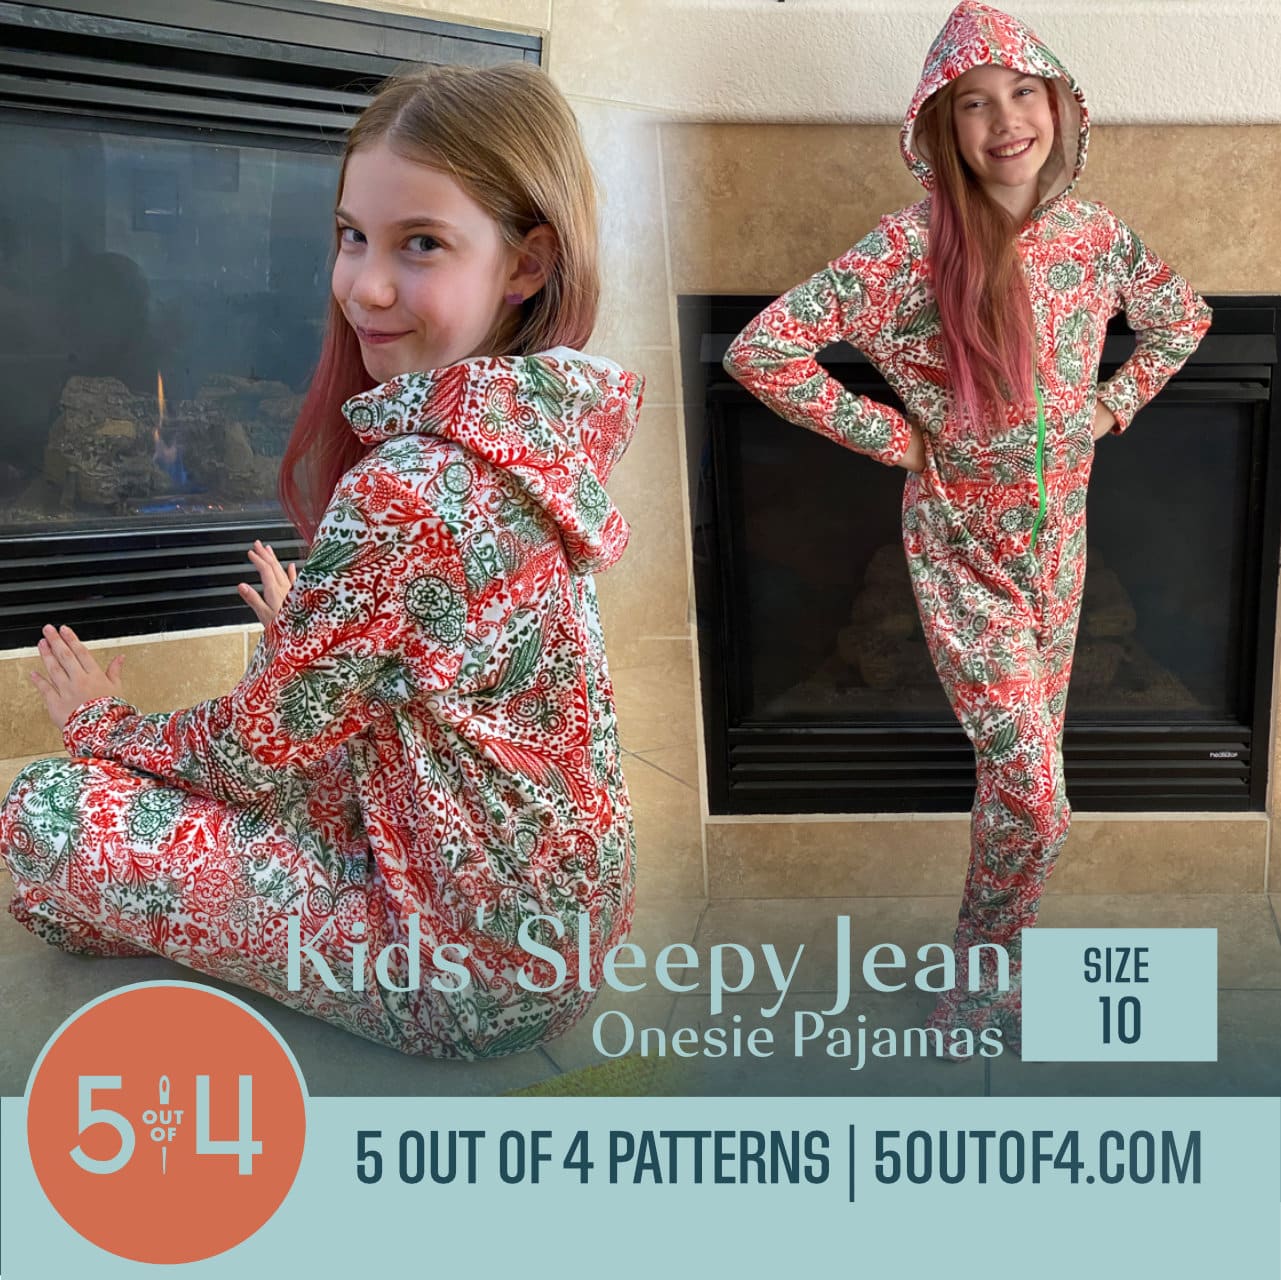 Kids' Sleepy Jean Onesie Pajamas